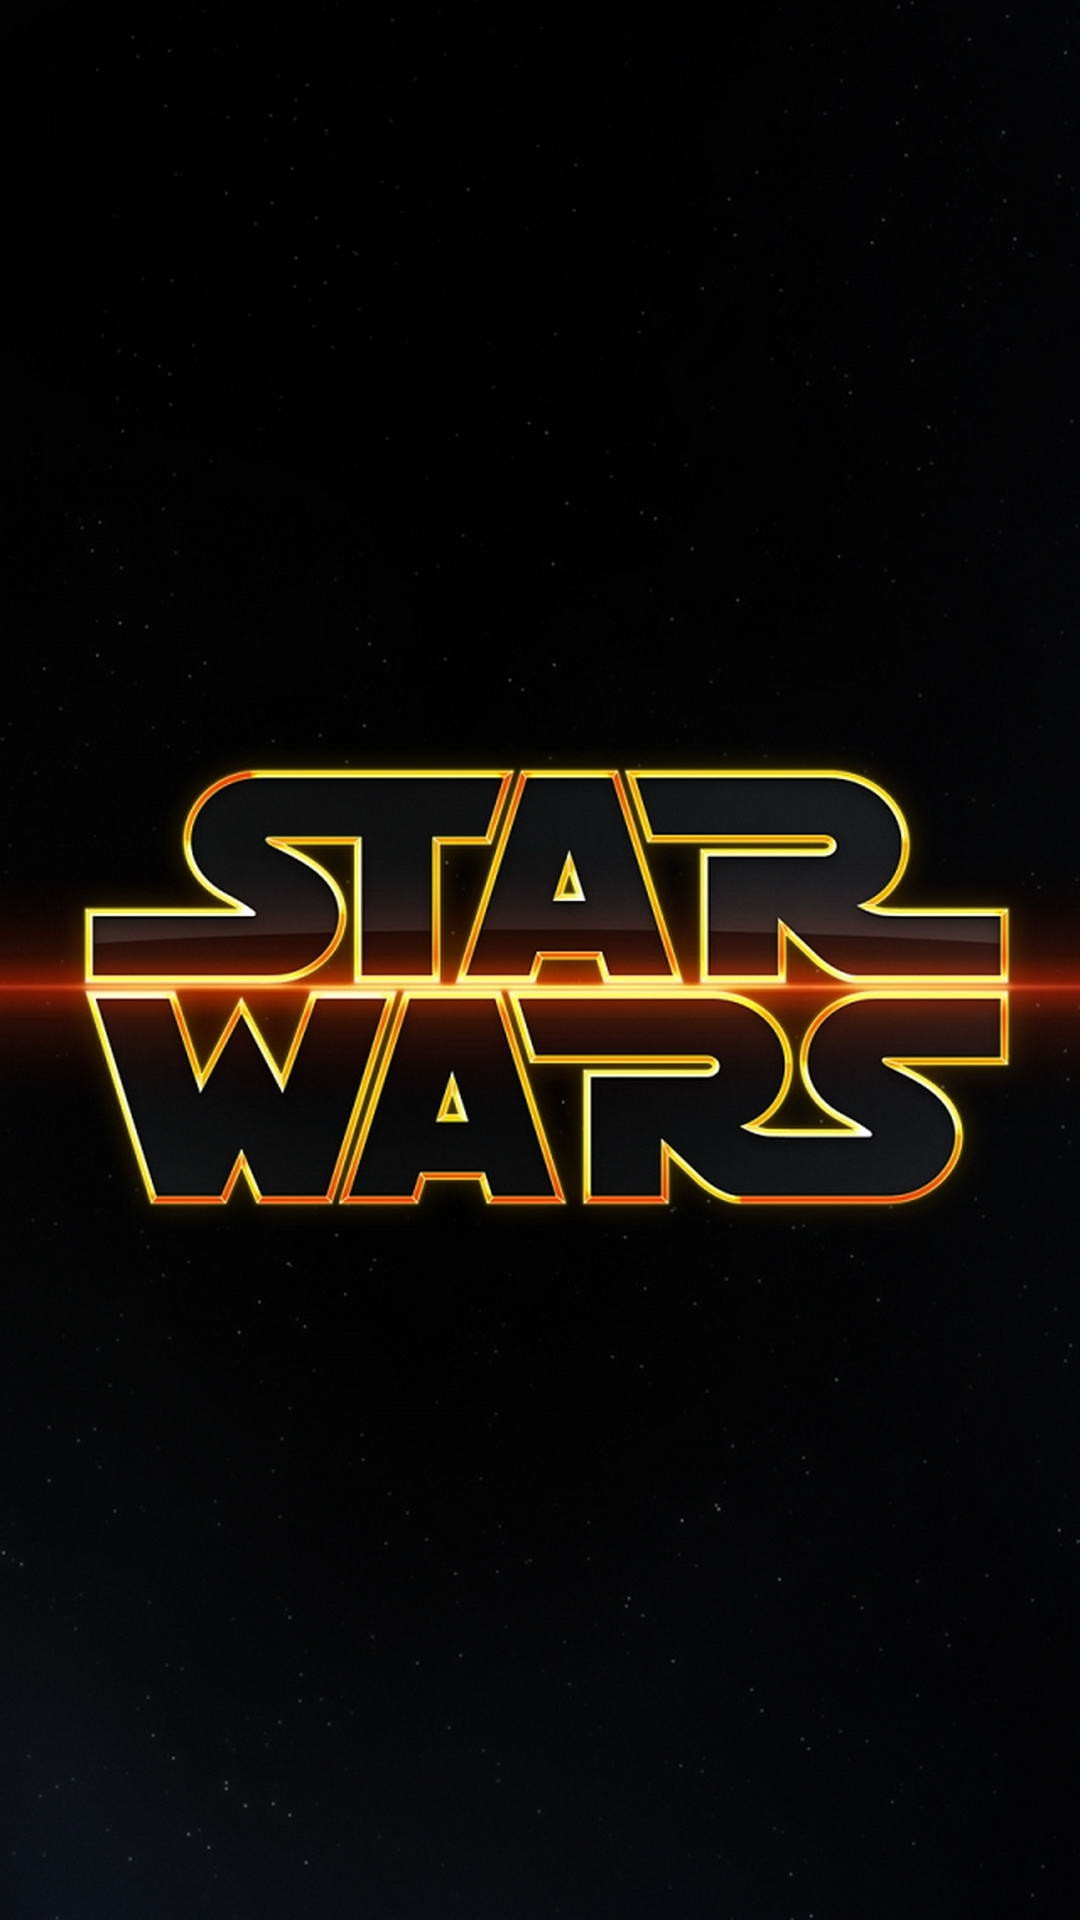 Star Wars Logo â Download more Star Wars iPhone Wallpapers at  @prettywallpaper Luke Skywalker!